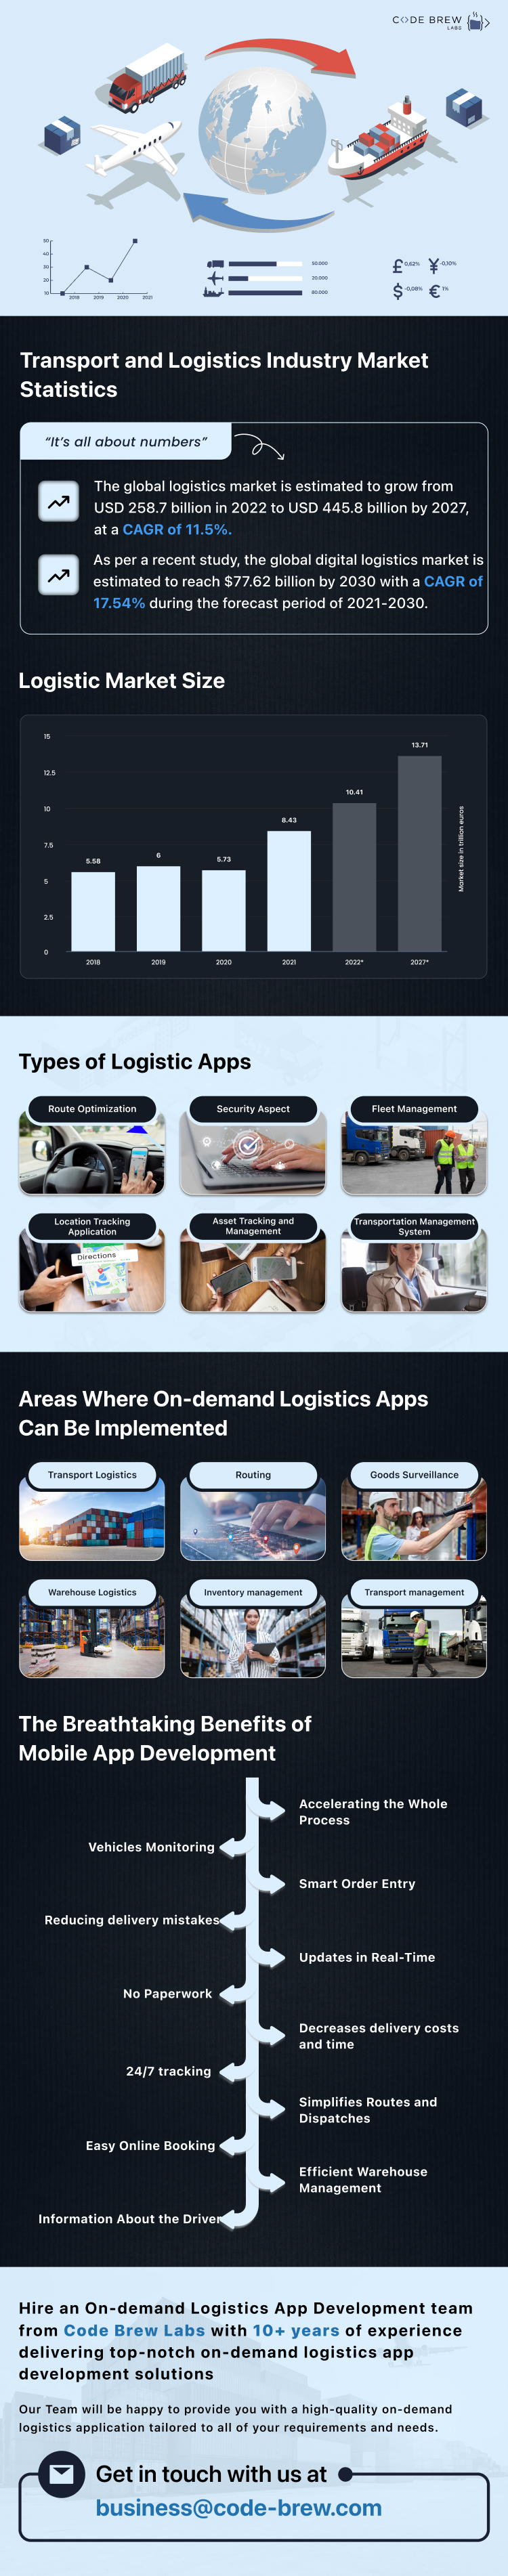 Logistics Mobile App Development company